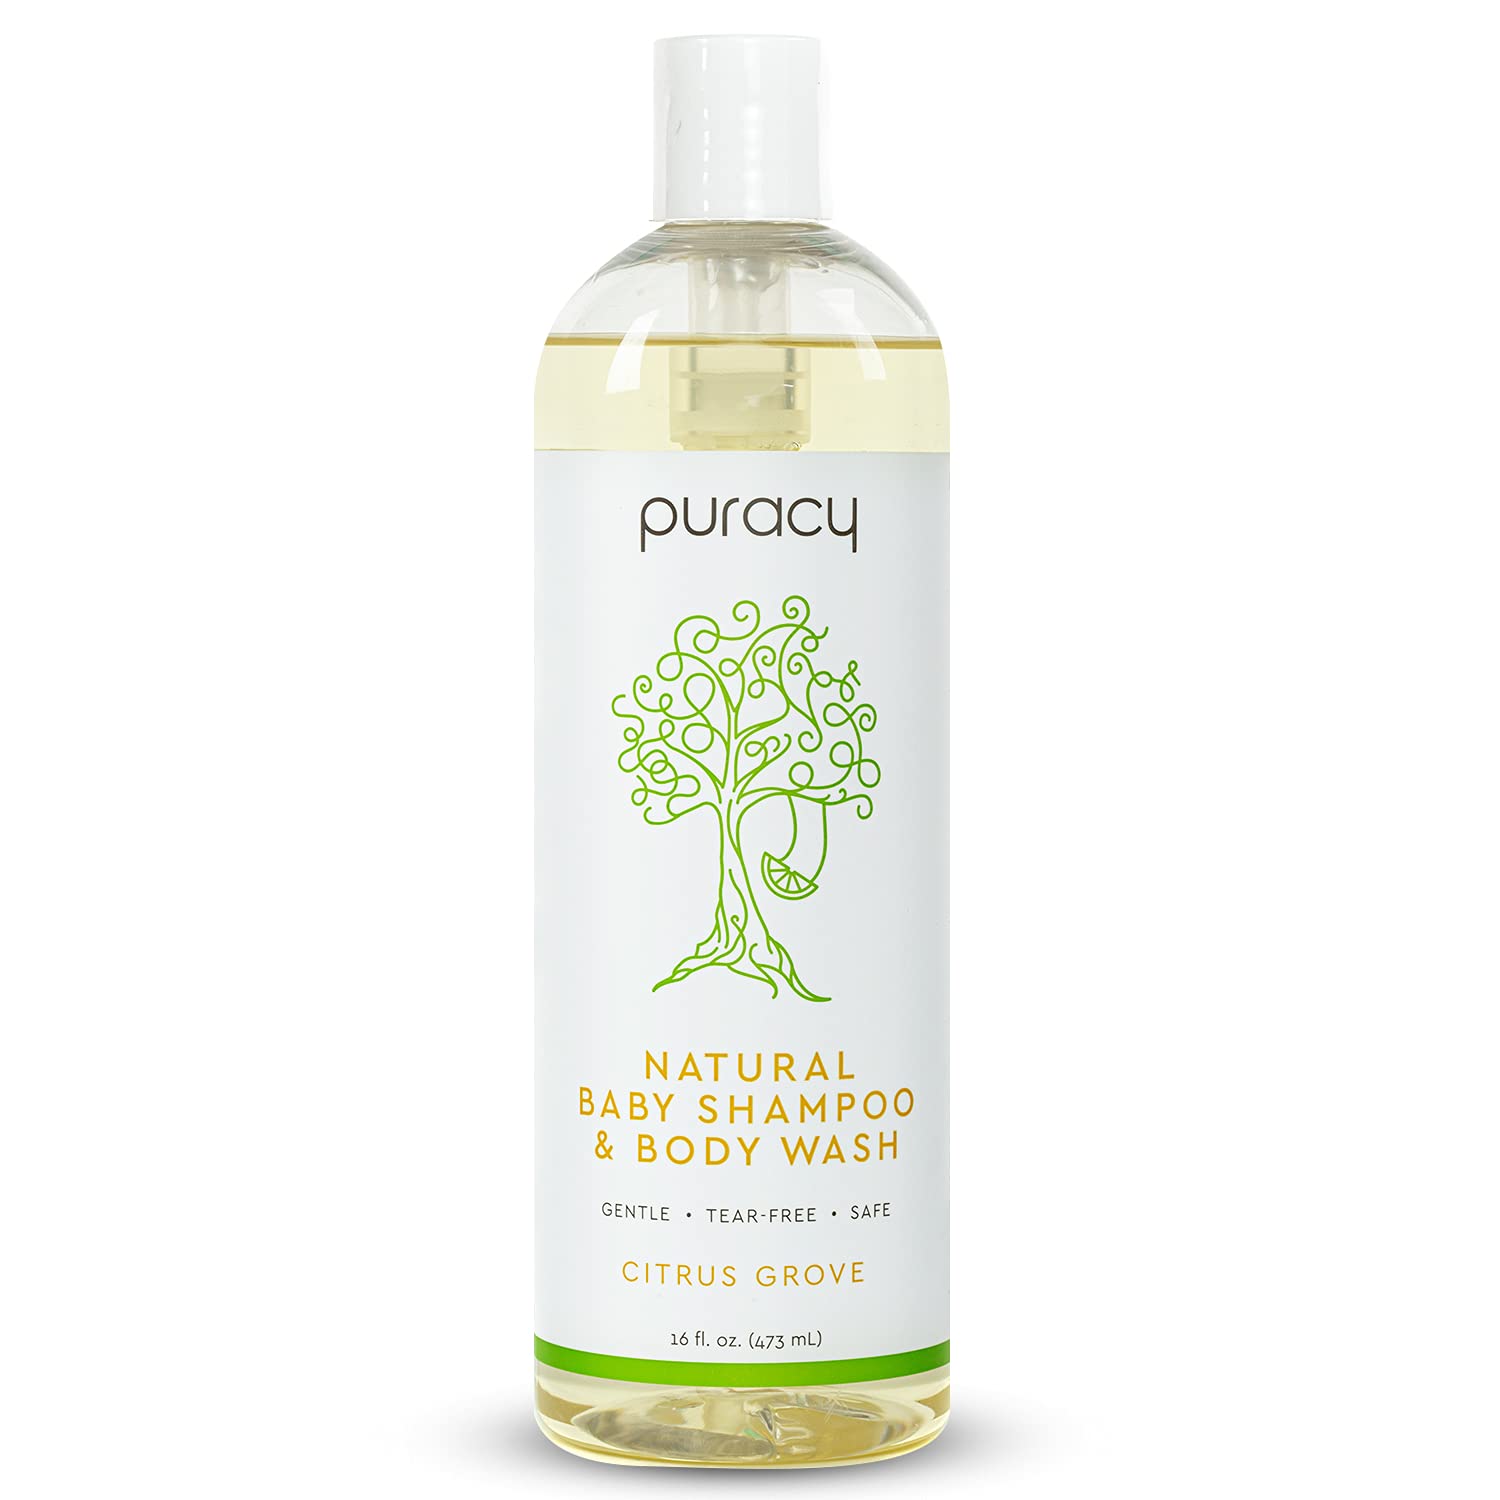 Puracy Natural Baby Shampoo & Body Wash Citrus Grove 16 fl oz (473 ml)